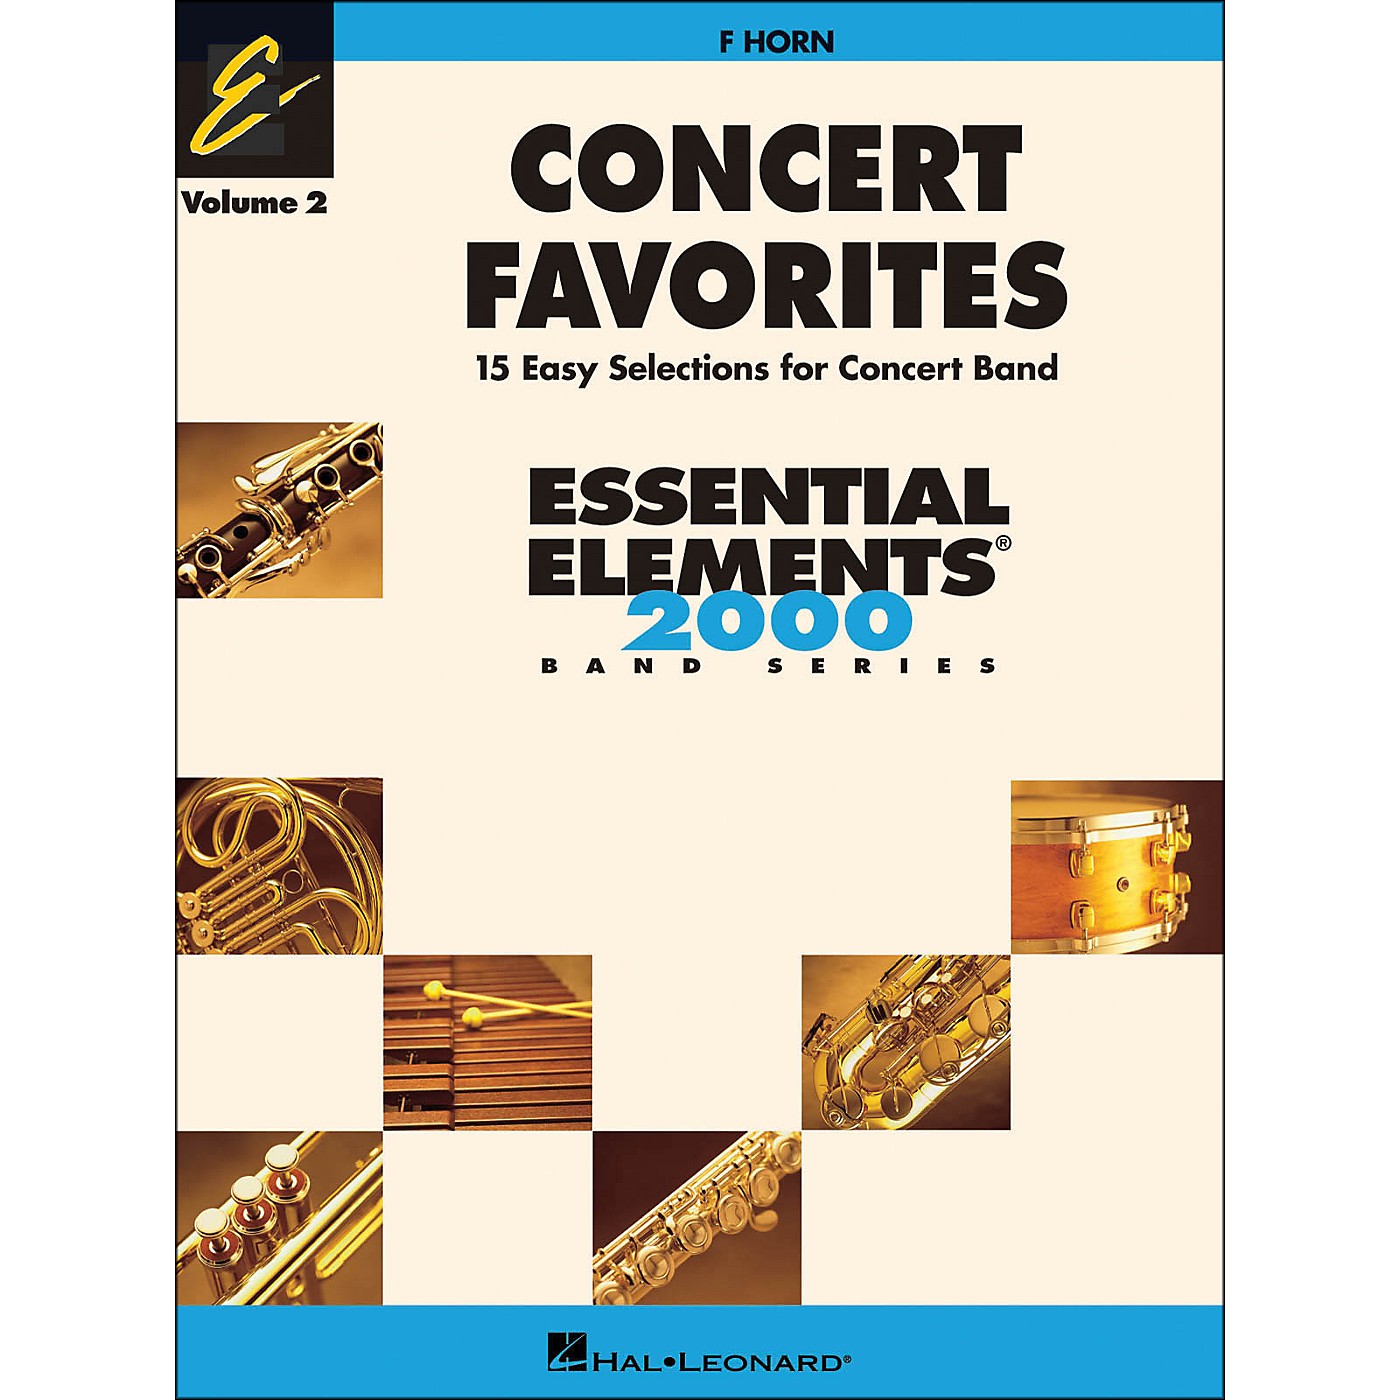 Hal Leonard Concert Favorites Volume 2 F Horn Essential Elements Band Series thumbnail